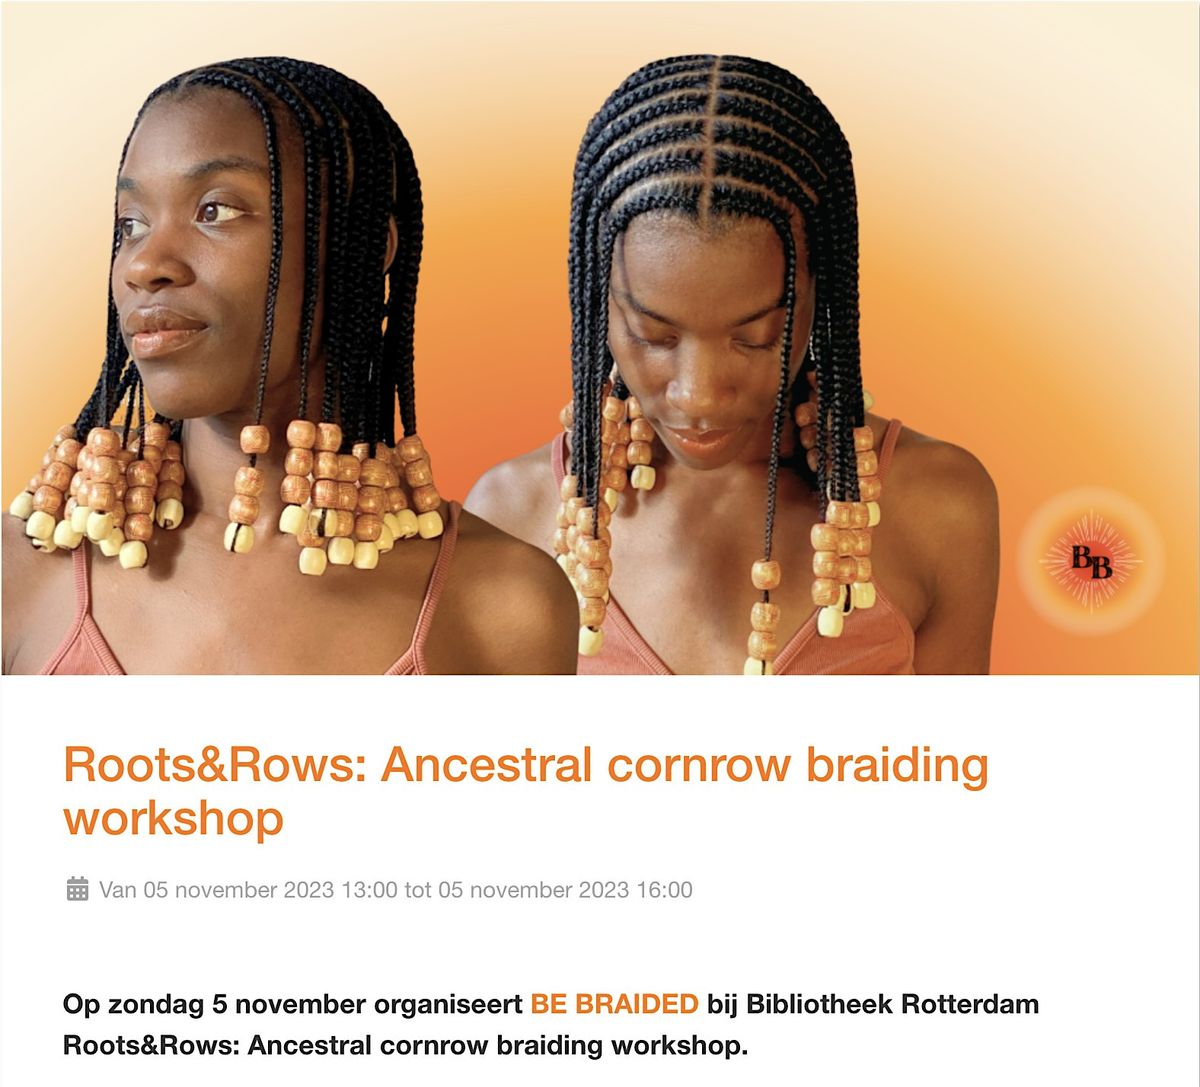 Roots&Rows: the ancestral cornrow braiding workshop